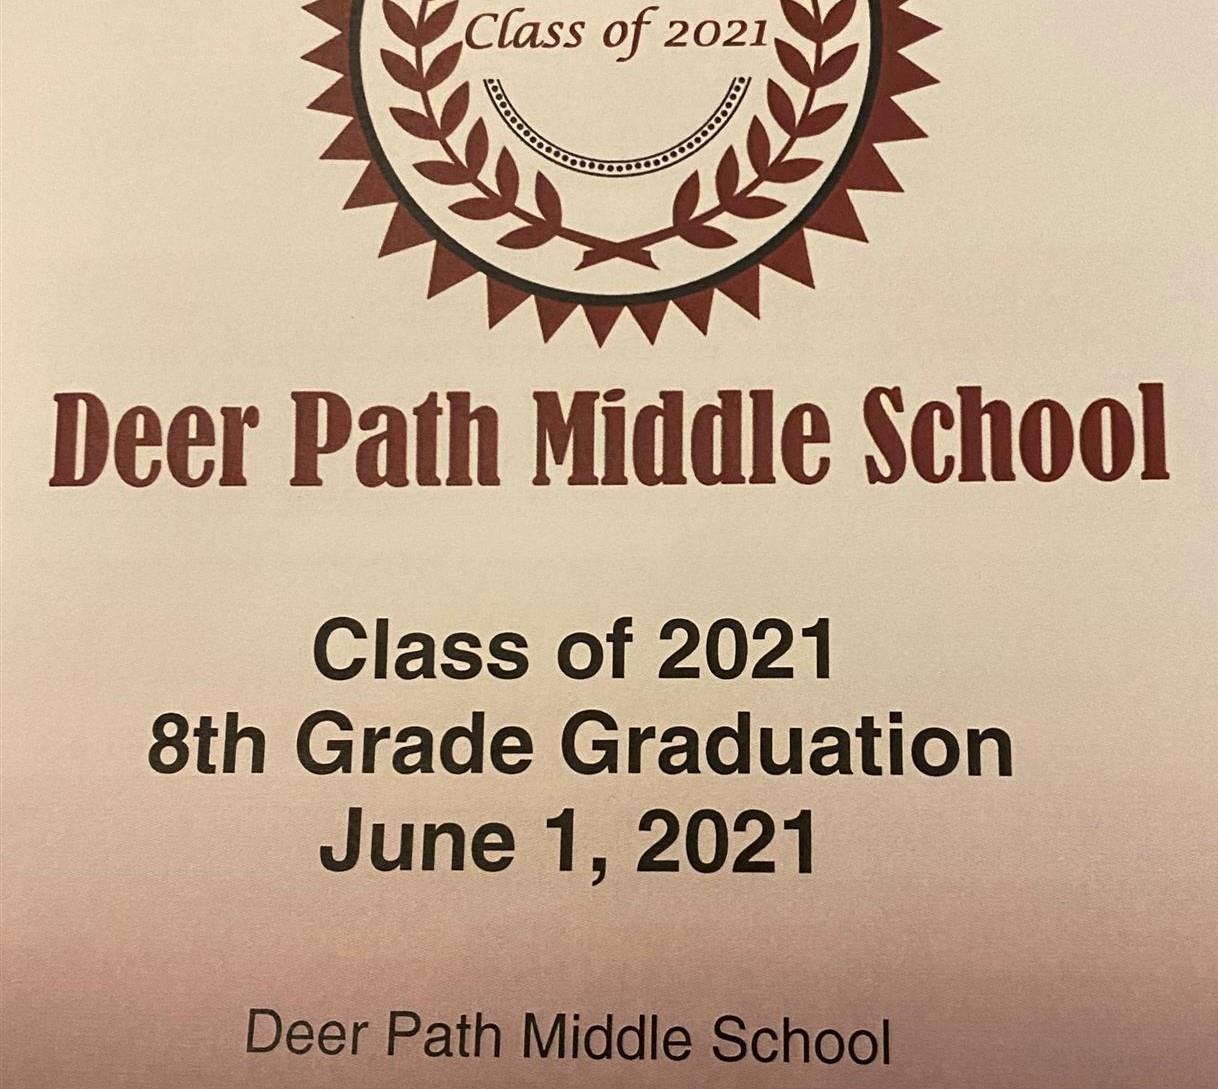 Class of 2021, Deer Path Middle School in a logo, Class of 2021 8th Grade Graduation June 1, 2021, Deerpath Middle School